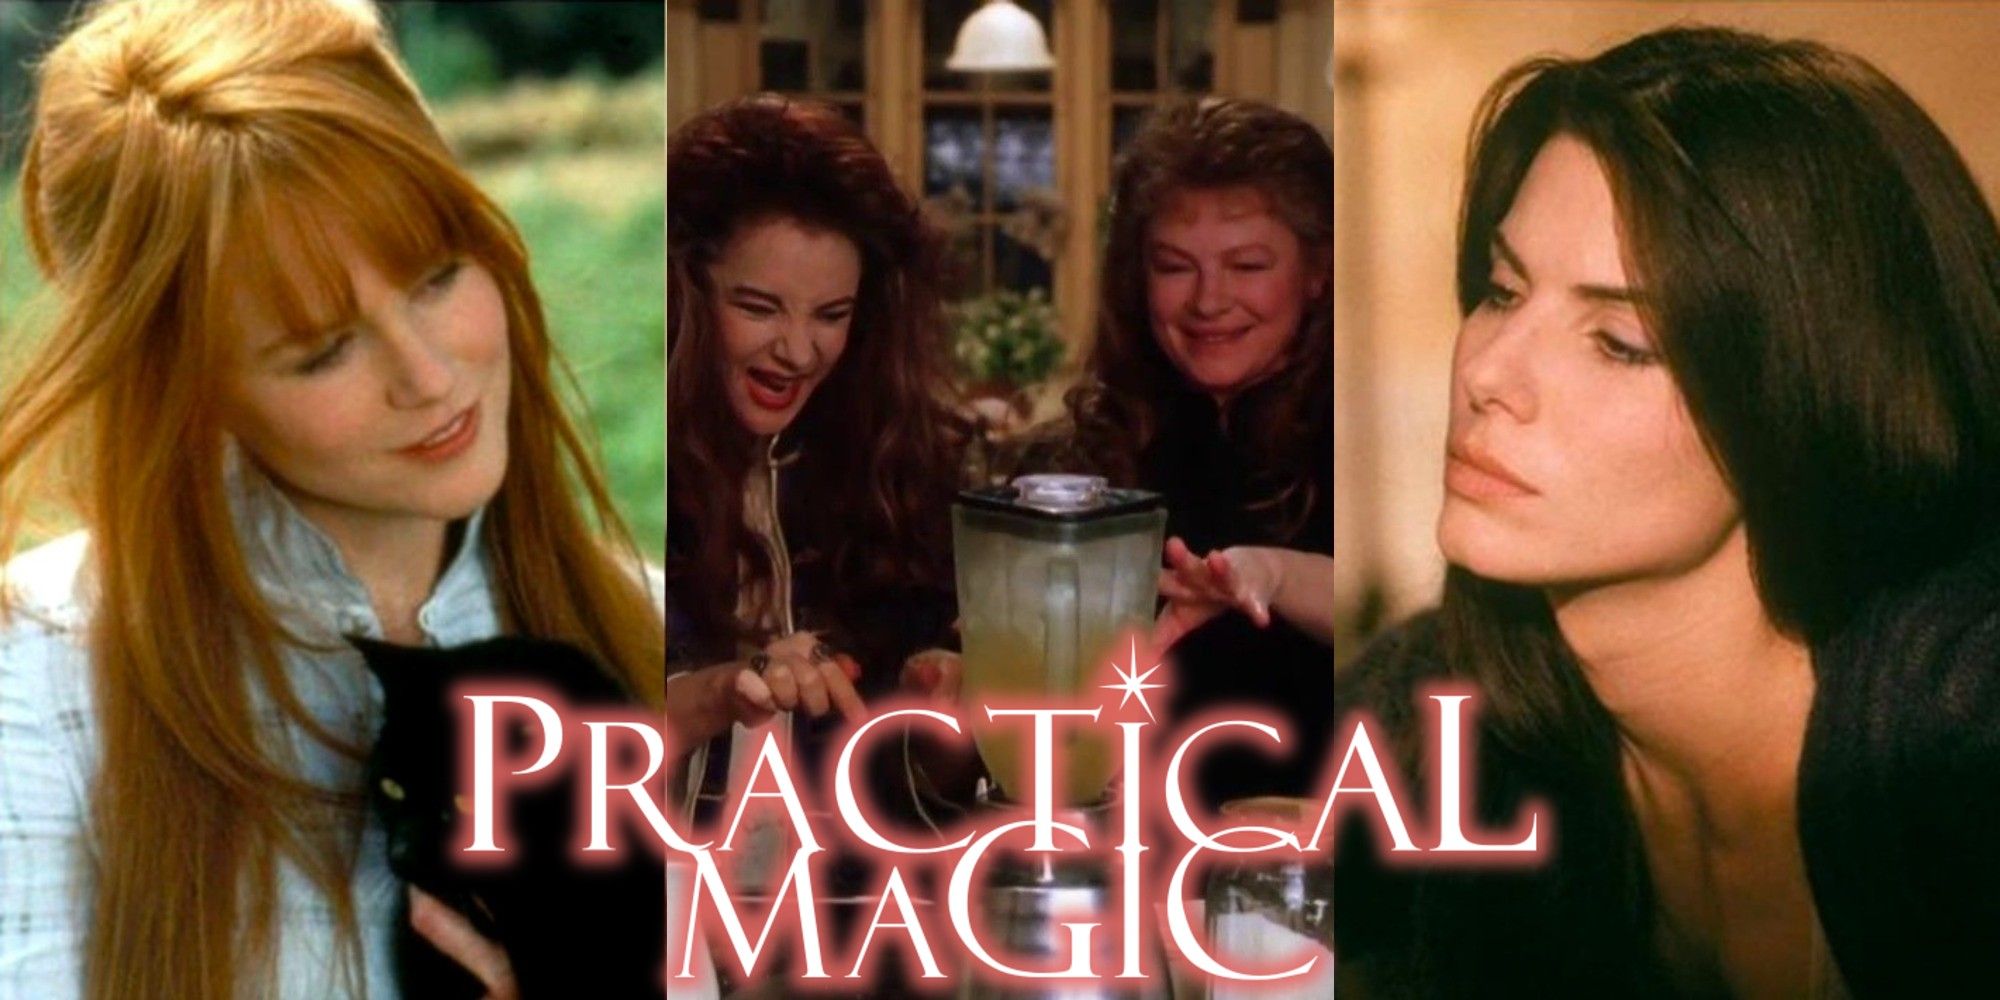 Nicole Kidman and Sandra Bullock – Practical Magic movie photo gallery